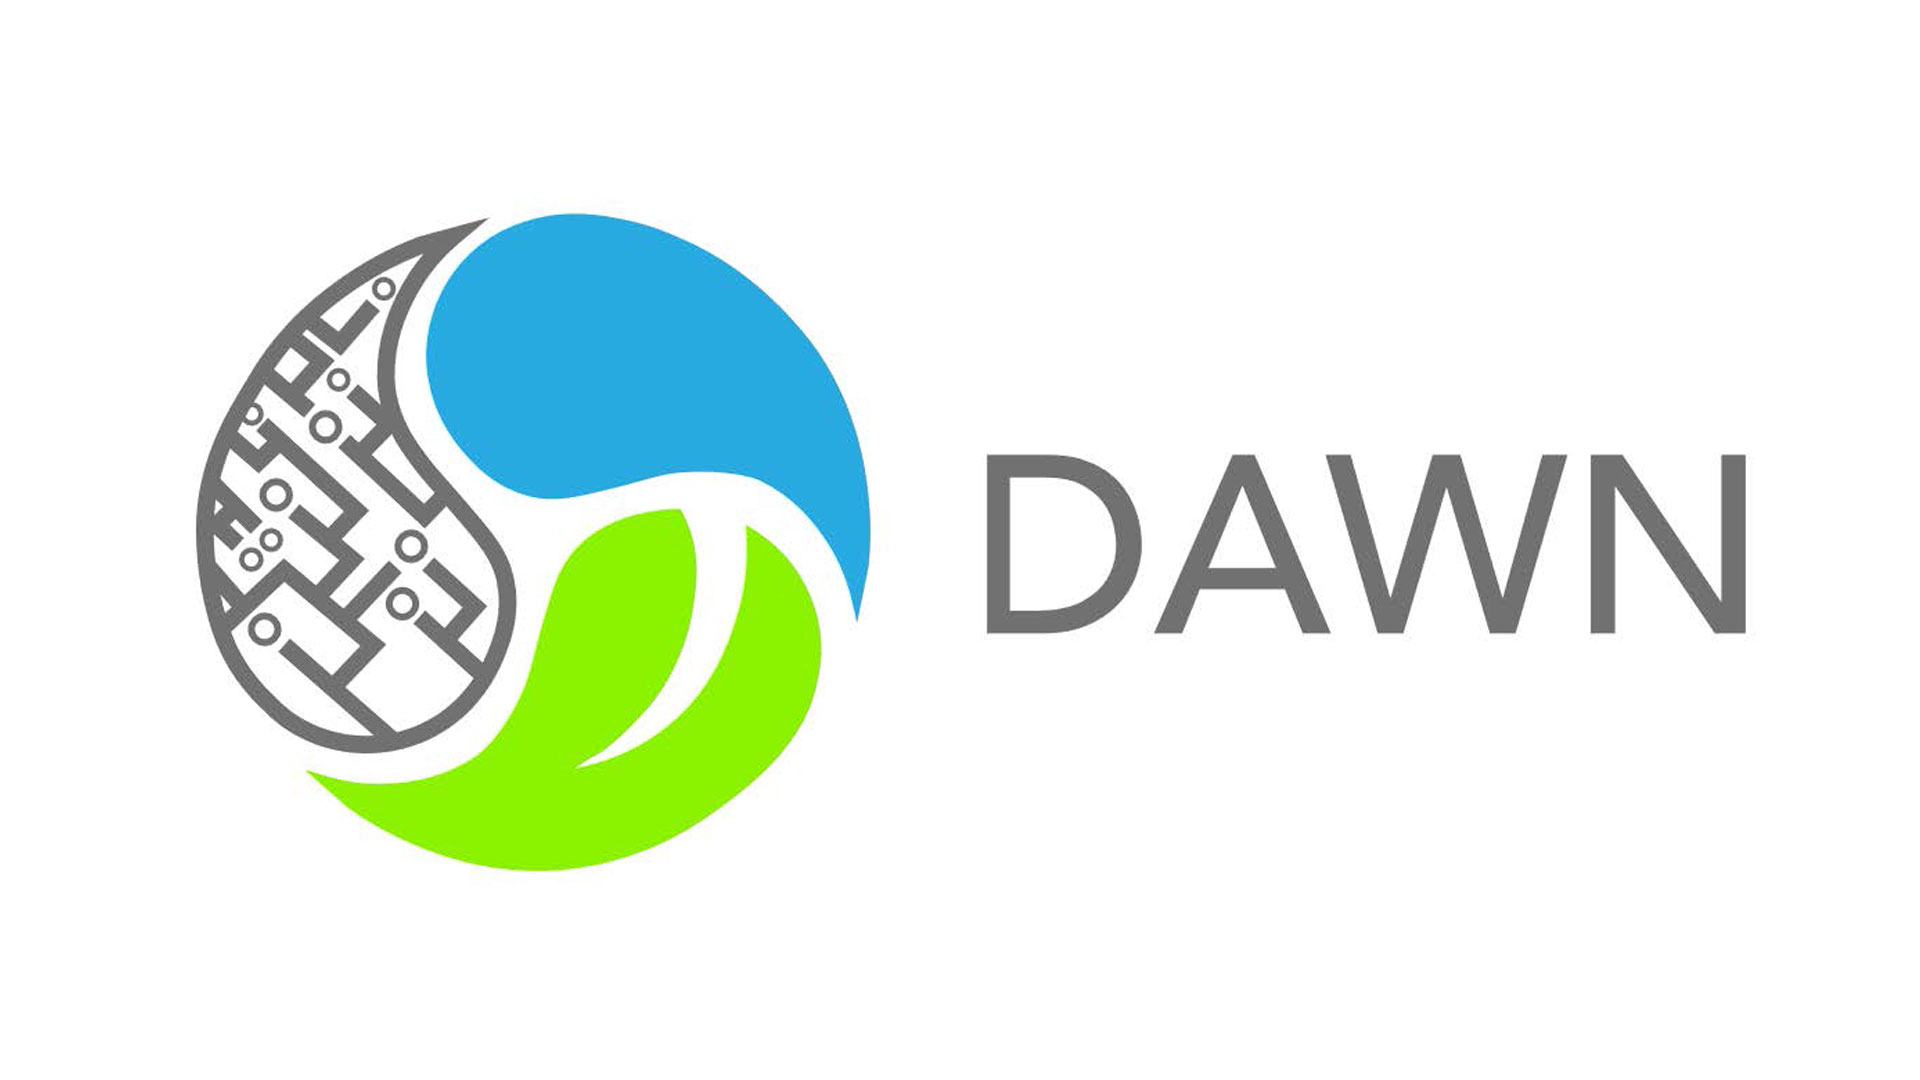 DAWN-Logo_1920x1080.jpg